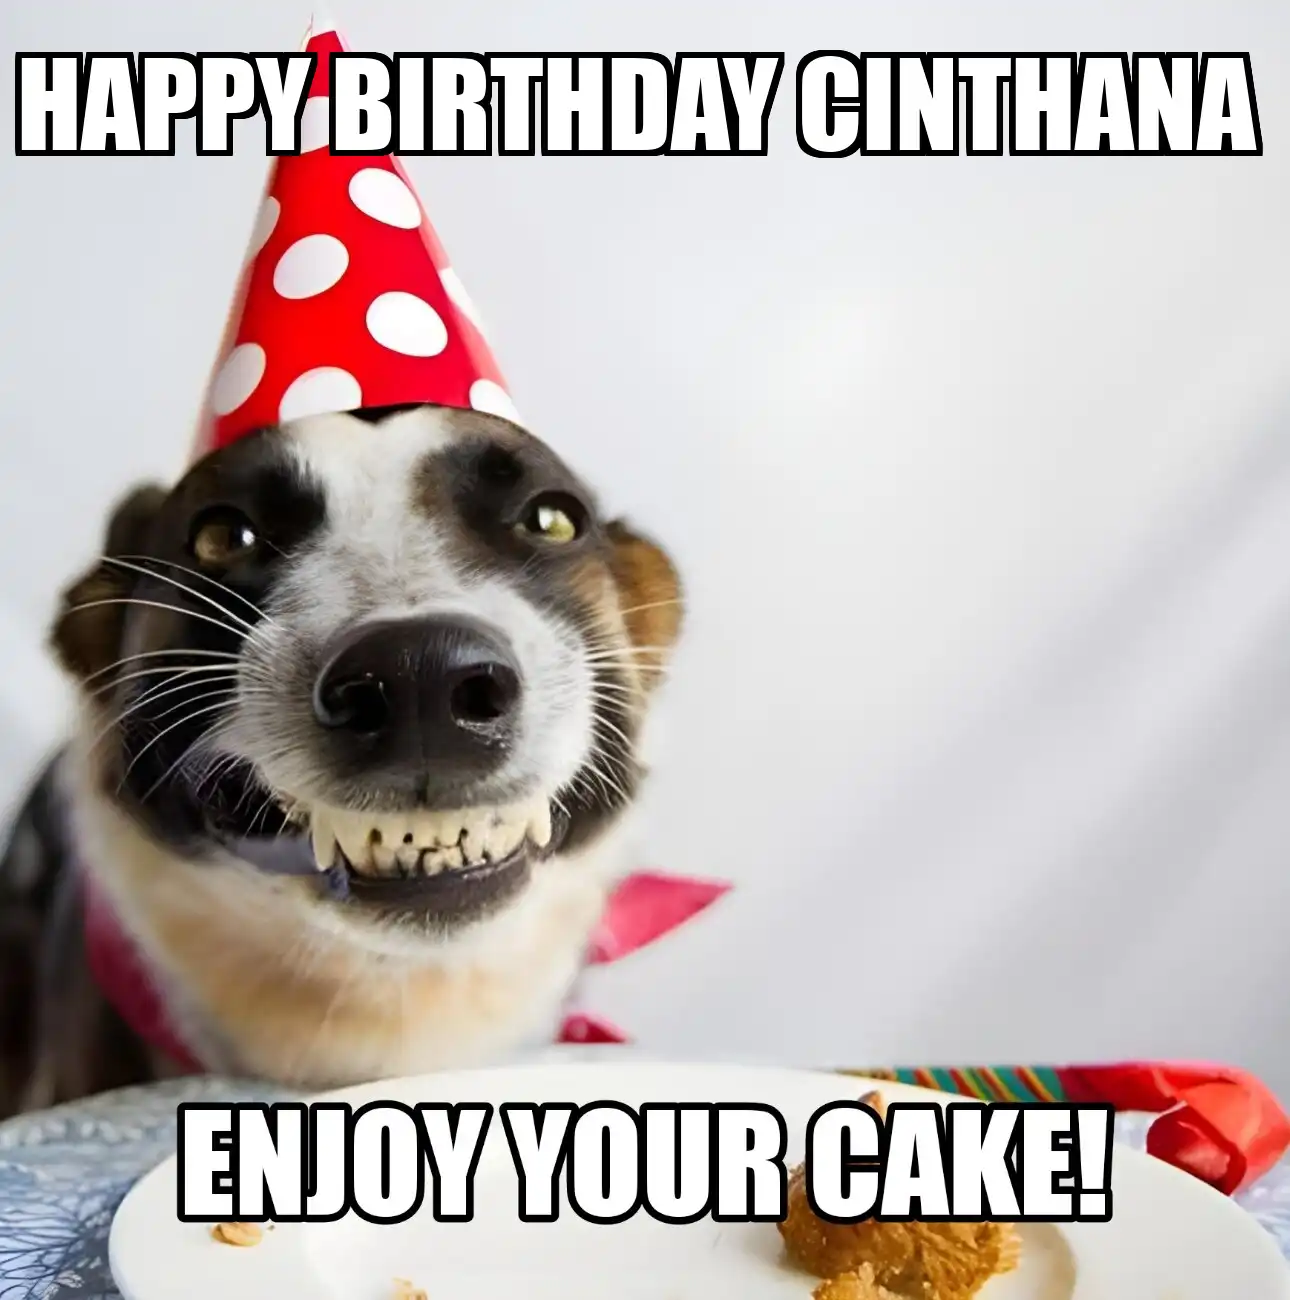 Happy Birthday Cinthana Enjoy Your Cake Dog Meme